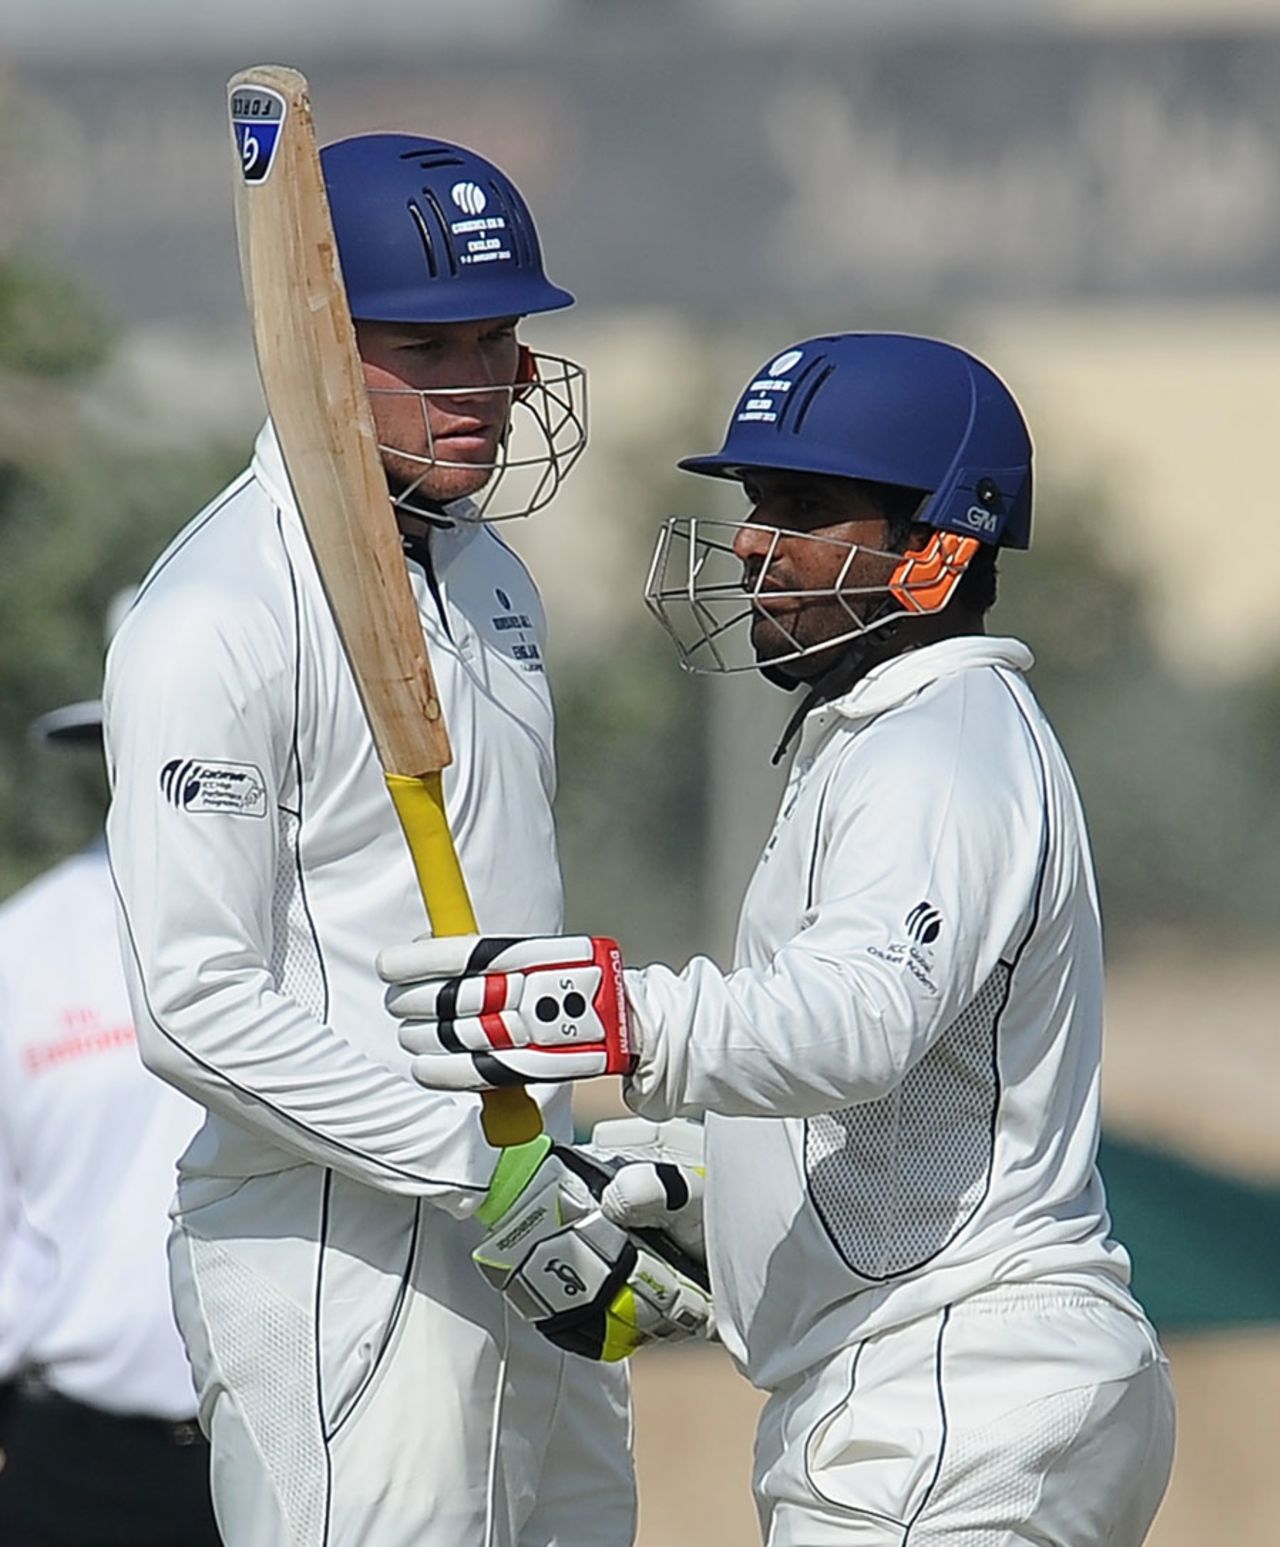 Mohammed Shahzad (right, 51) and Christi Viljoen (98) provided valuable runs for ICC XI, ICC Combined XI v England XI, Dubai, 1st day, January 7, 2012